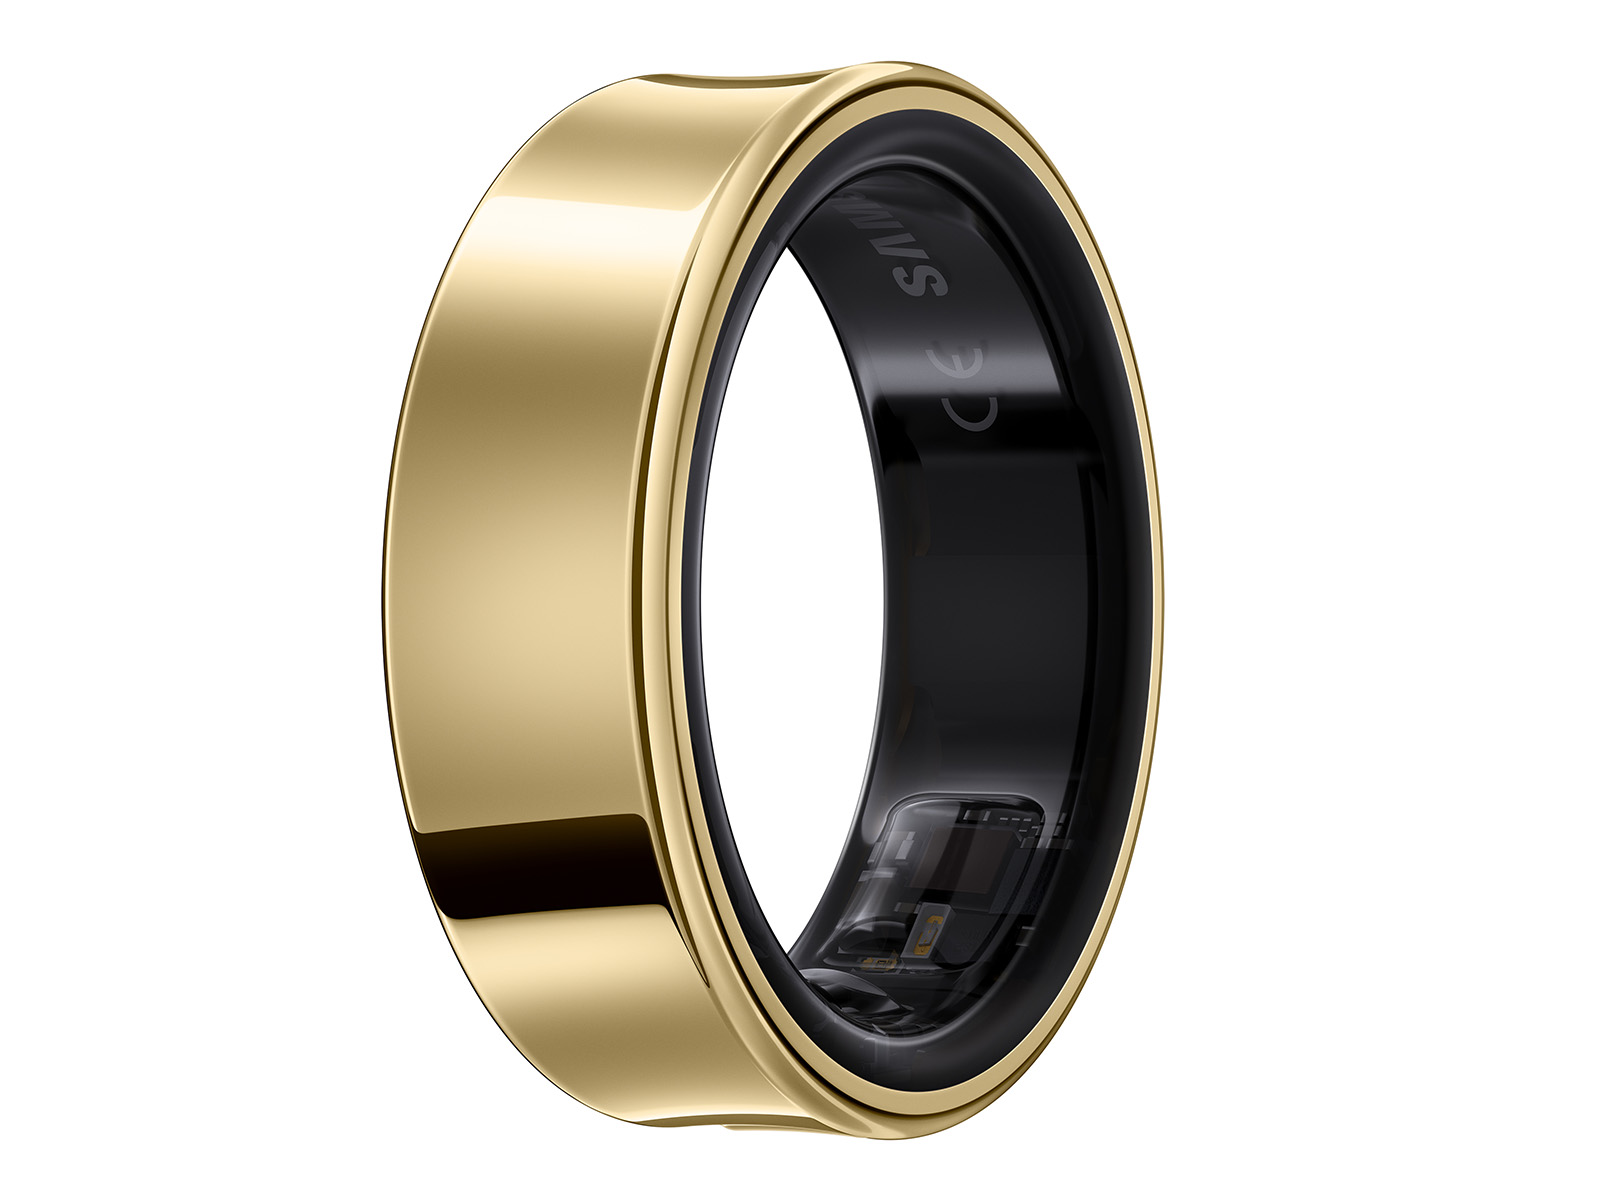 Thumbnail image of Galaxy Ring, Size 8, Titanium Gold